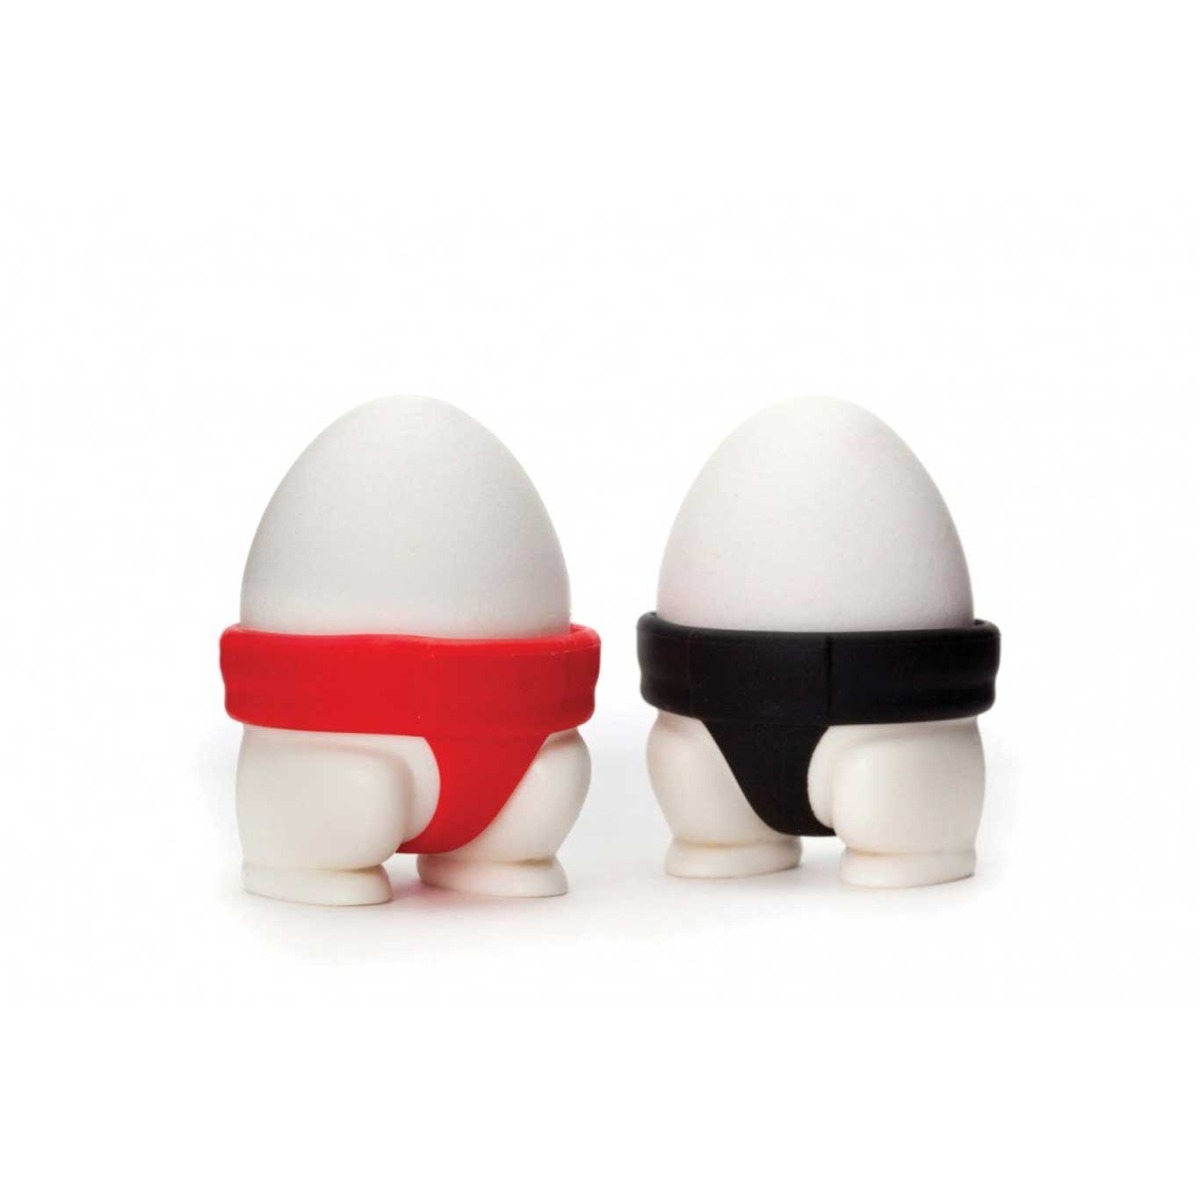 Sumo Eggs 2 Egg cups - 1